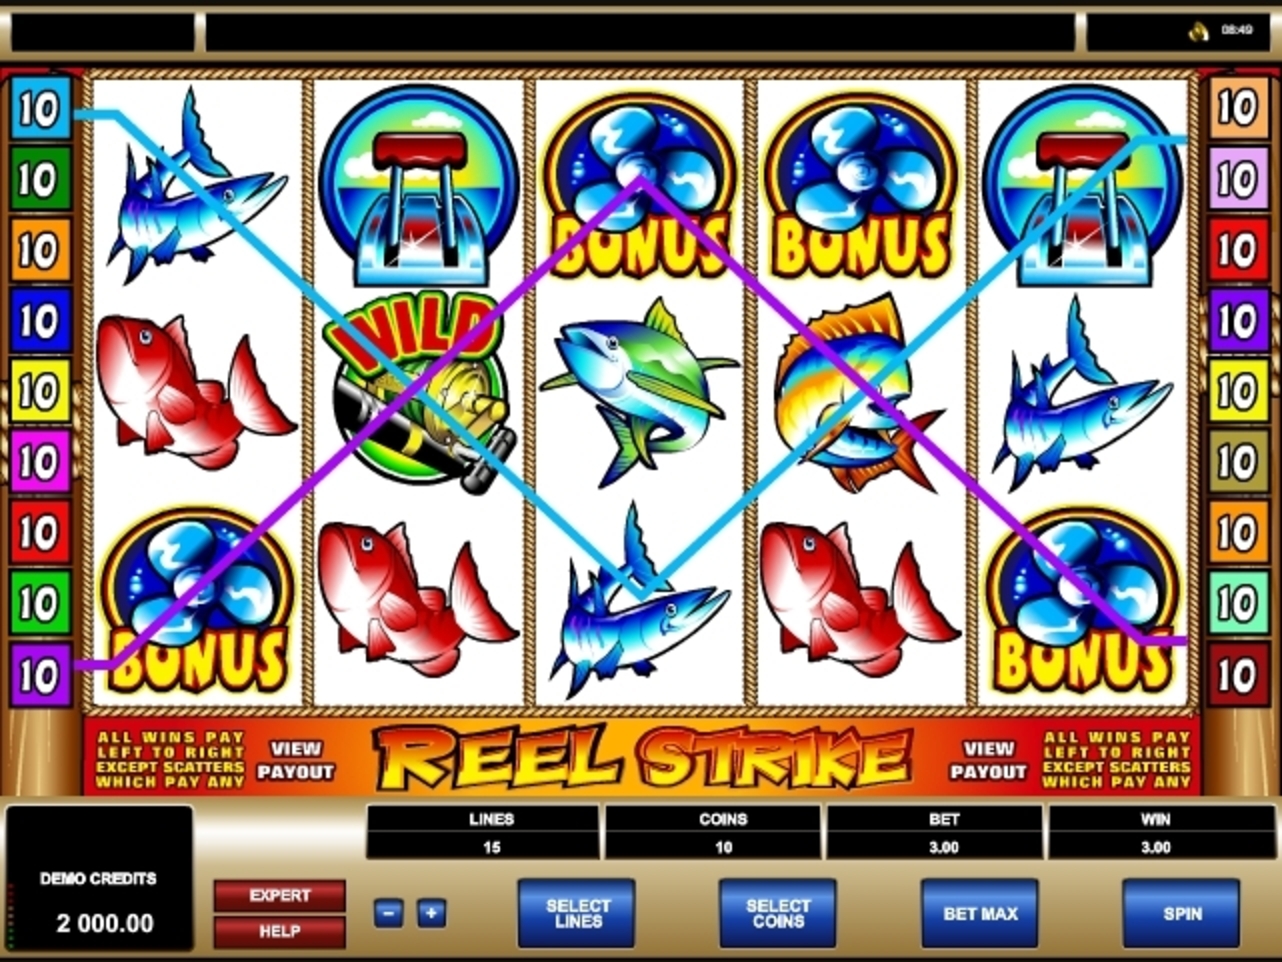 Win Money in Reel Strike Free Slot Game by Microgaming